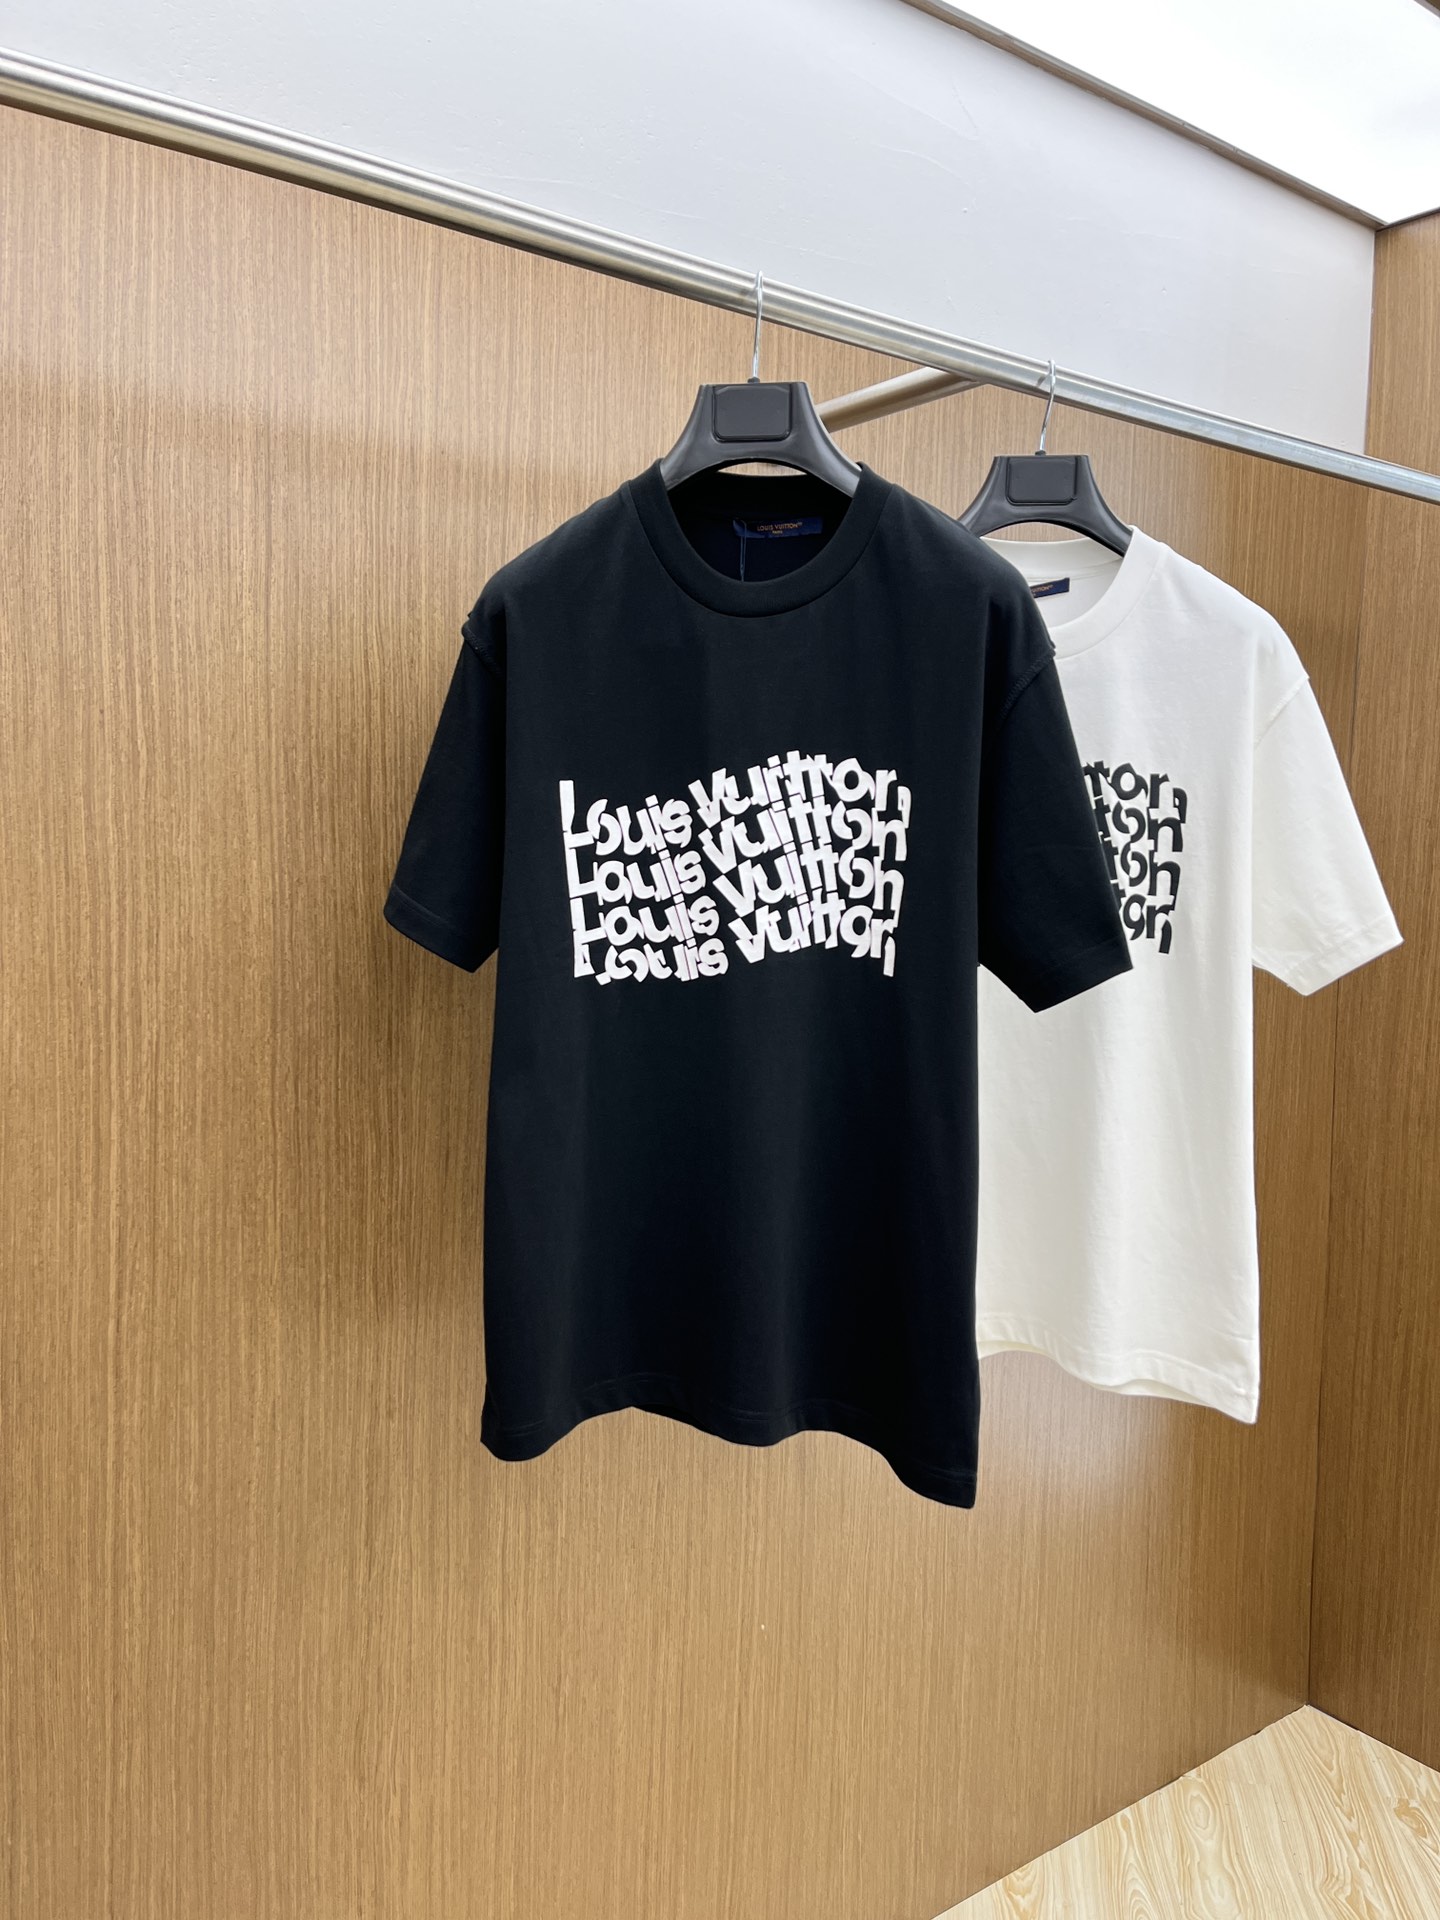 Louis Vuitton Replicas
 Clothing T-Shirt Cotton Spring Collection Fashion Short Sleeve